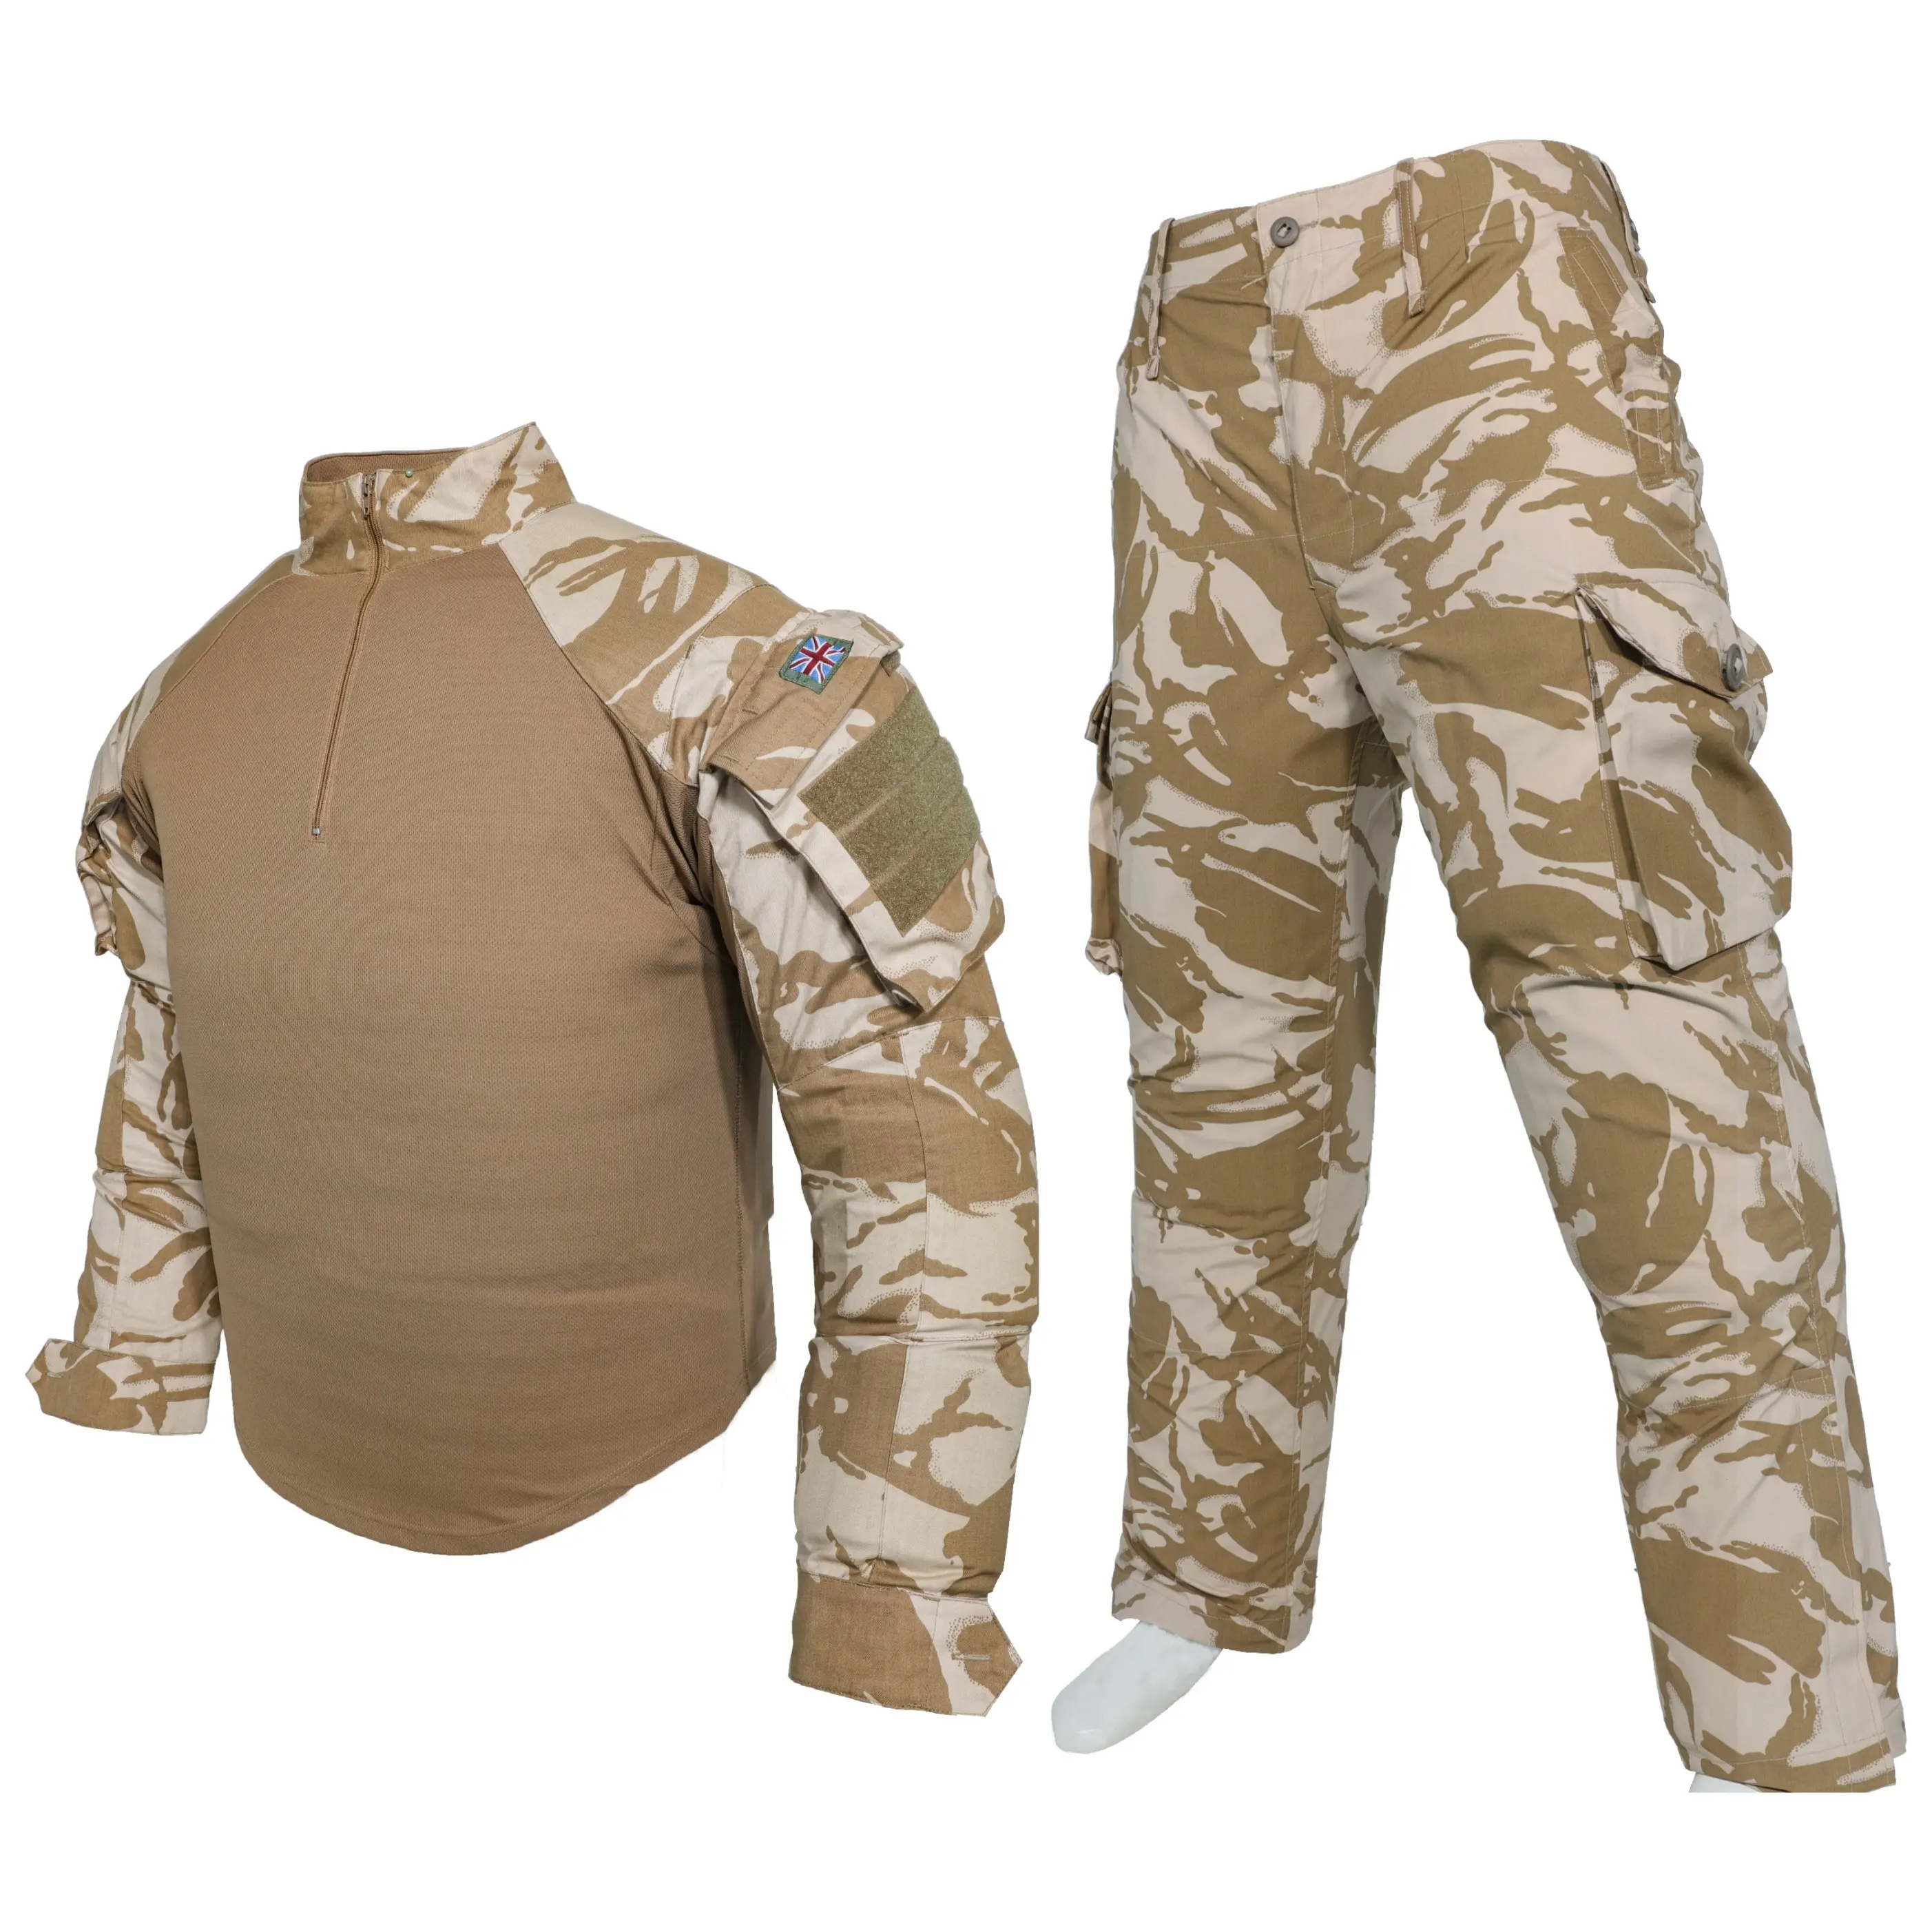 27434 británico MPT uniforme Fatiga Combat Set camuflaje táctico uniforme desierto camuflaje trajes de combate